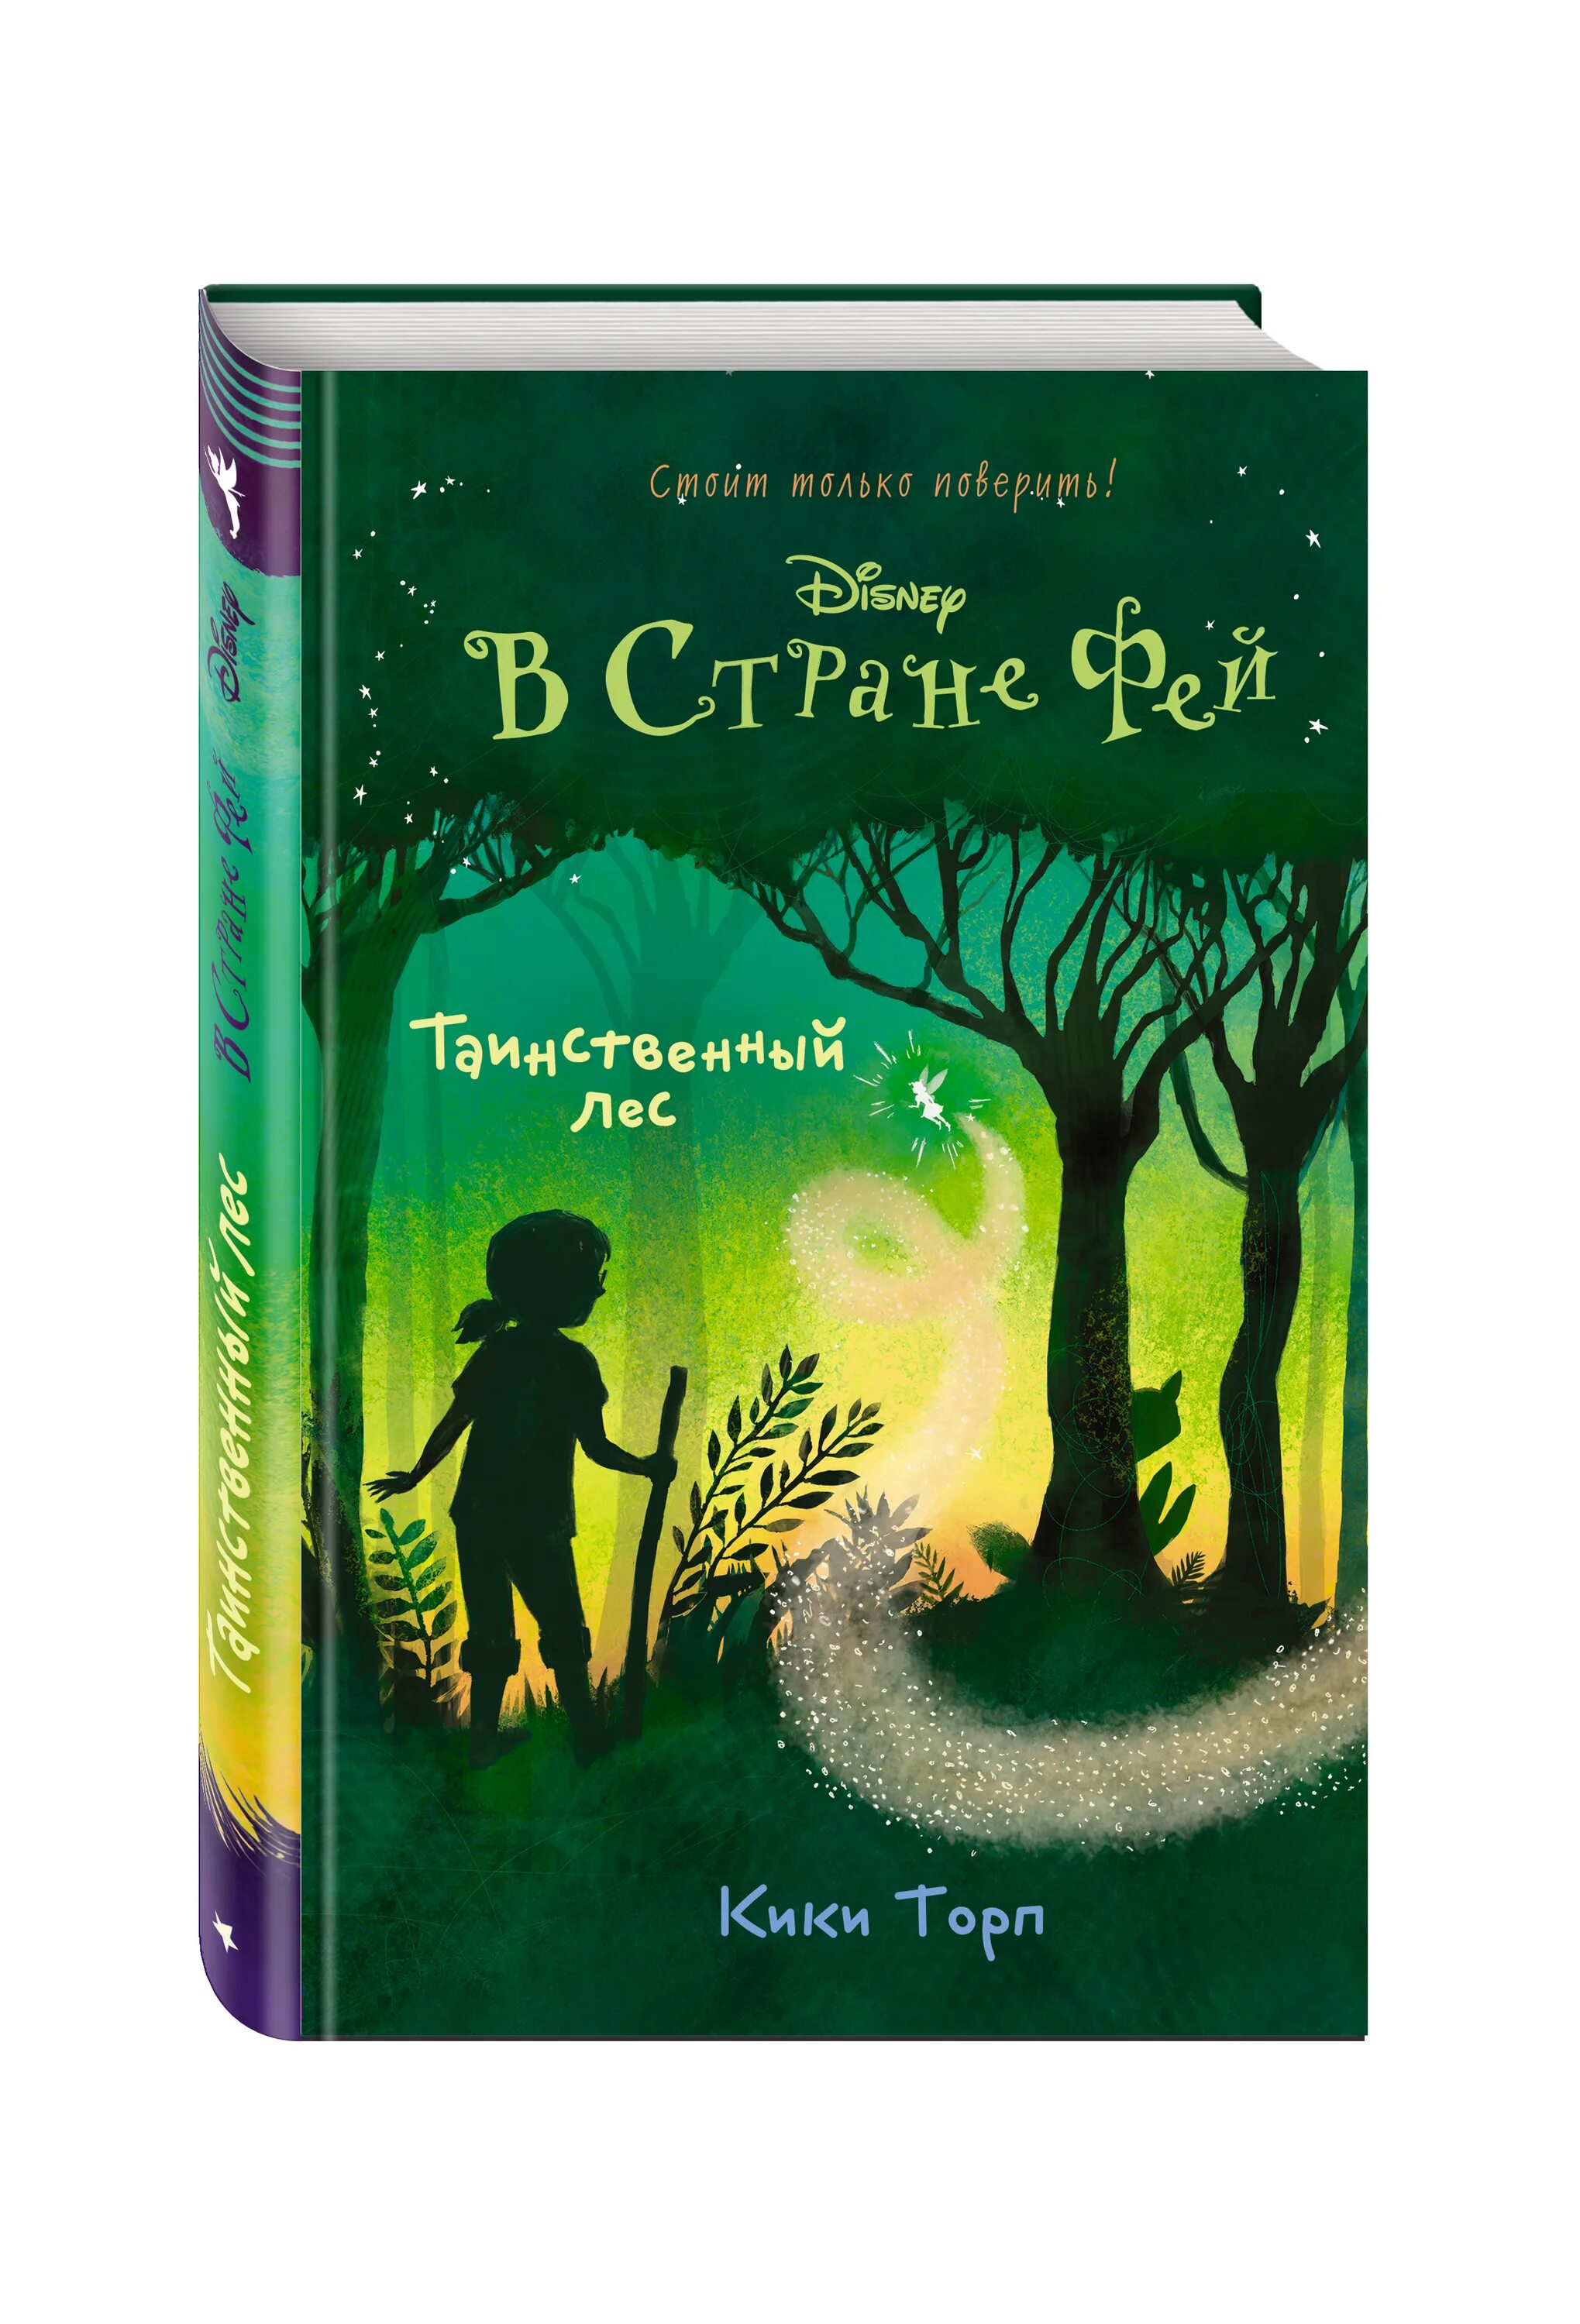 Книга лес. Кики Торп таинственный лес. Таинственный лес книга. Таинственный лес в стране фей. Таинственный лес книга для детей.